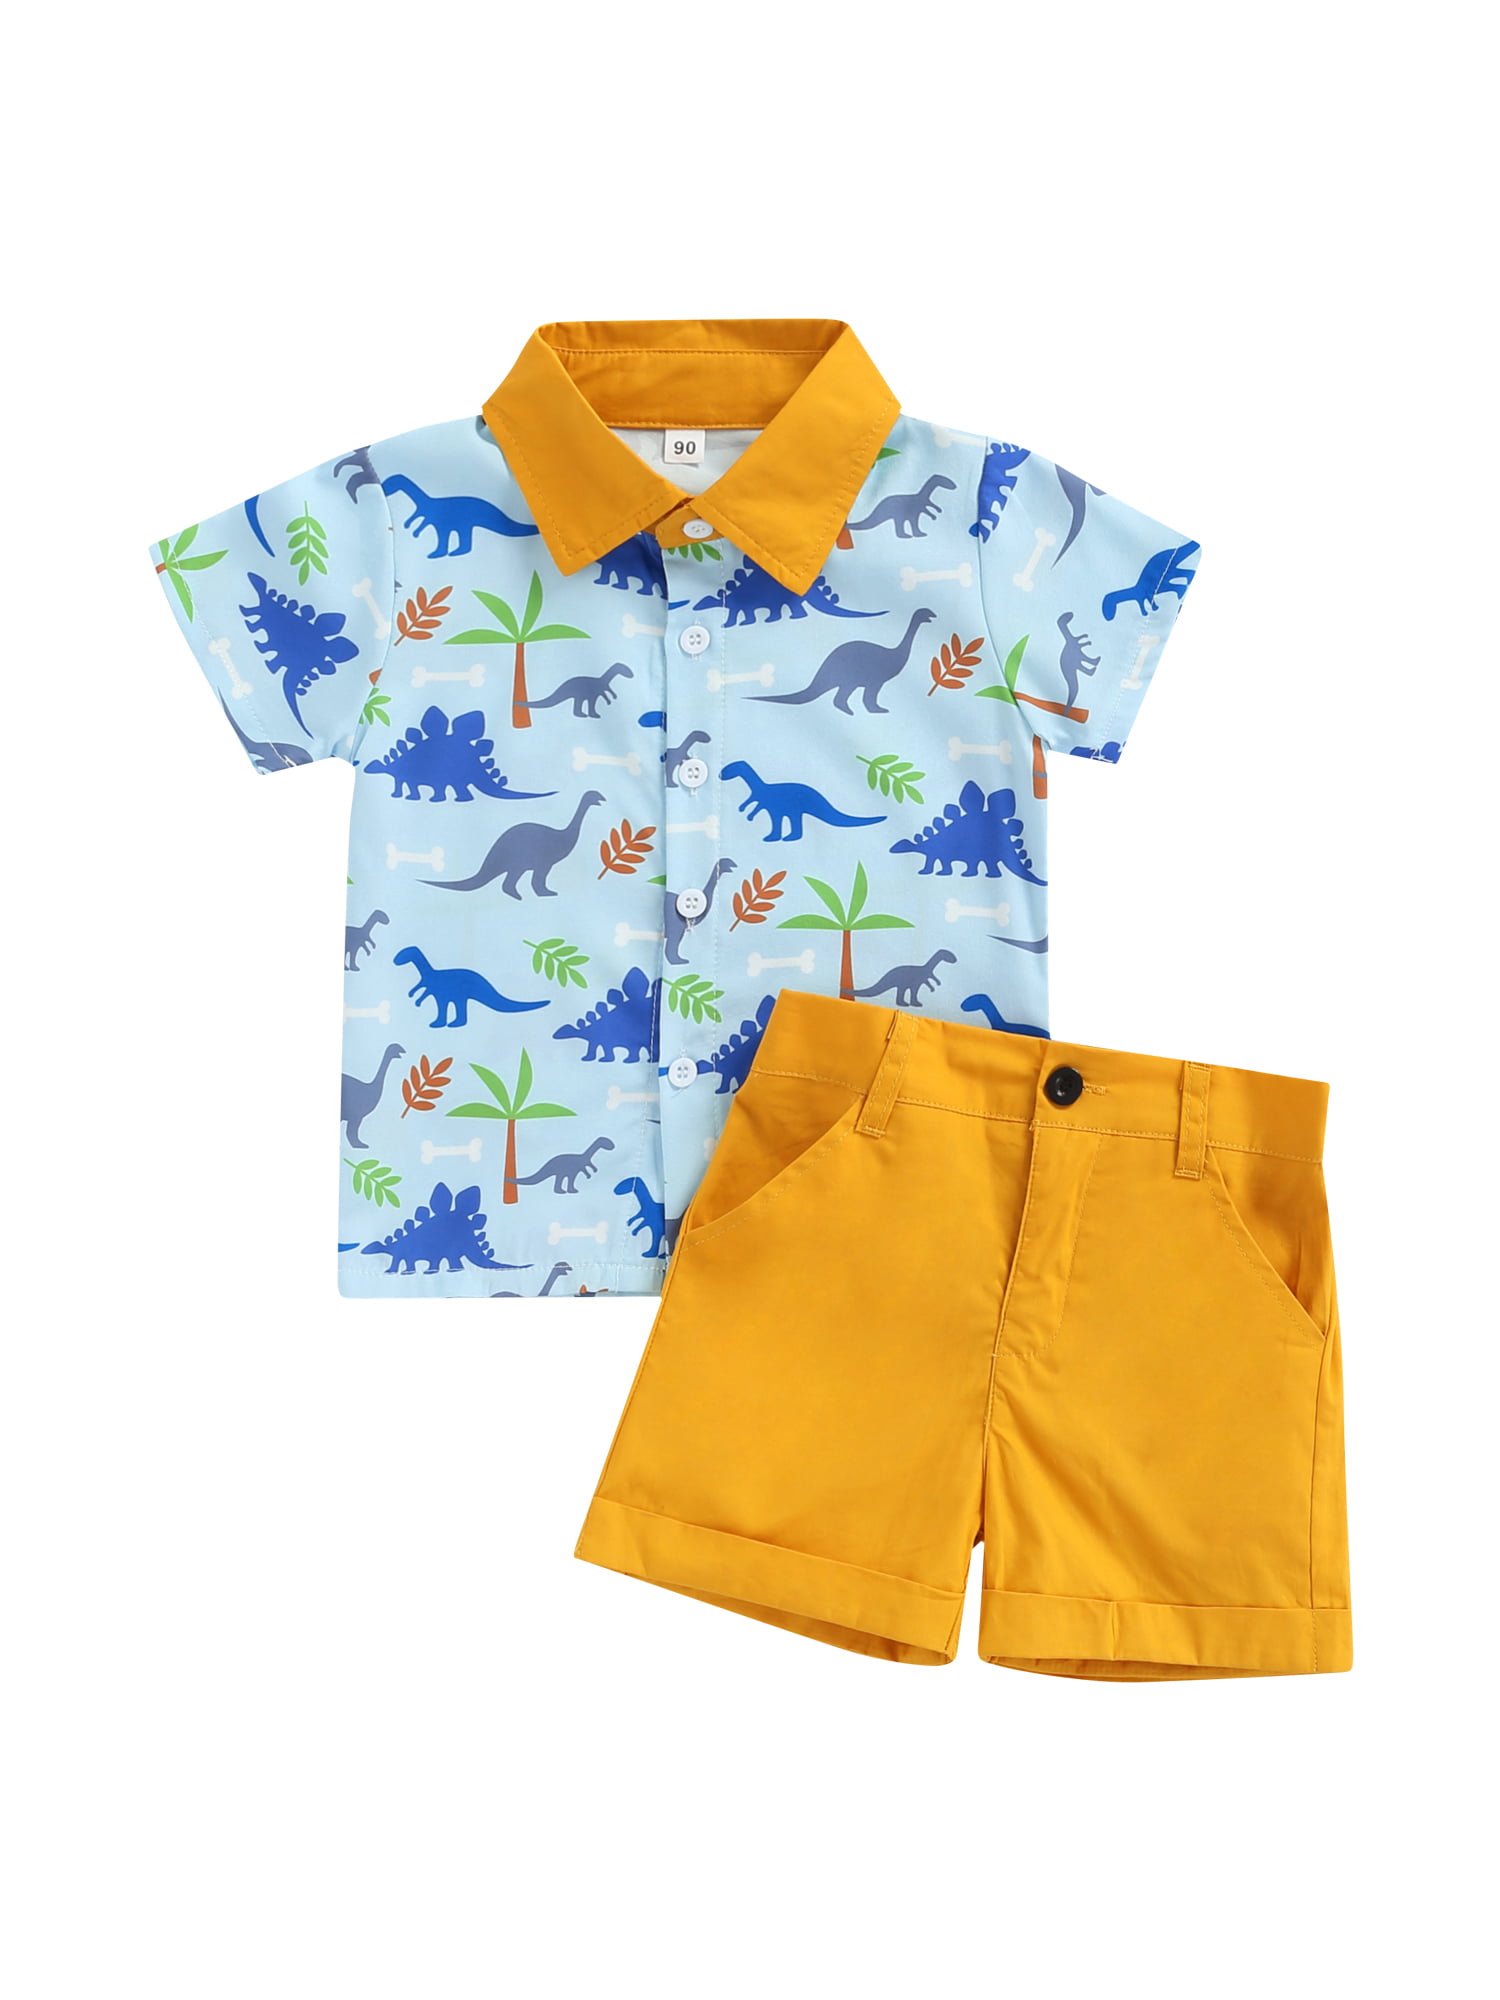 jaweiw 2Pcs Little Boys Summer Beach Wear Outfit, Toddlers Cartoon ...